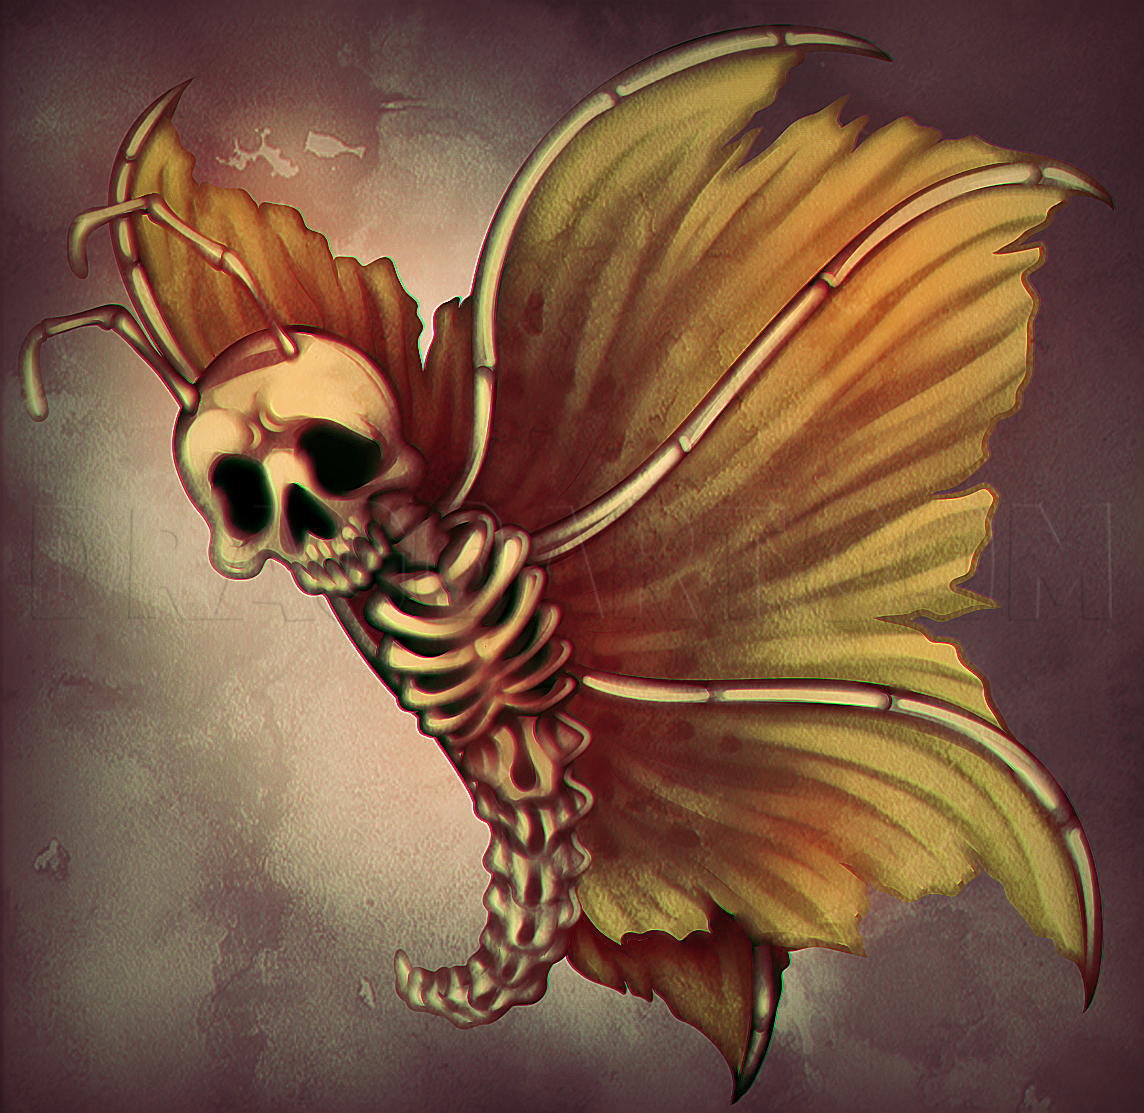 Скелет с крыльями бабочки. Скелет с крылышками бабочки. Скелет с крыльями бабочки рисунок. Скелет бабочки